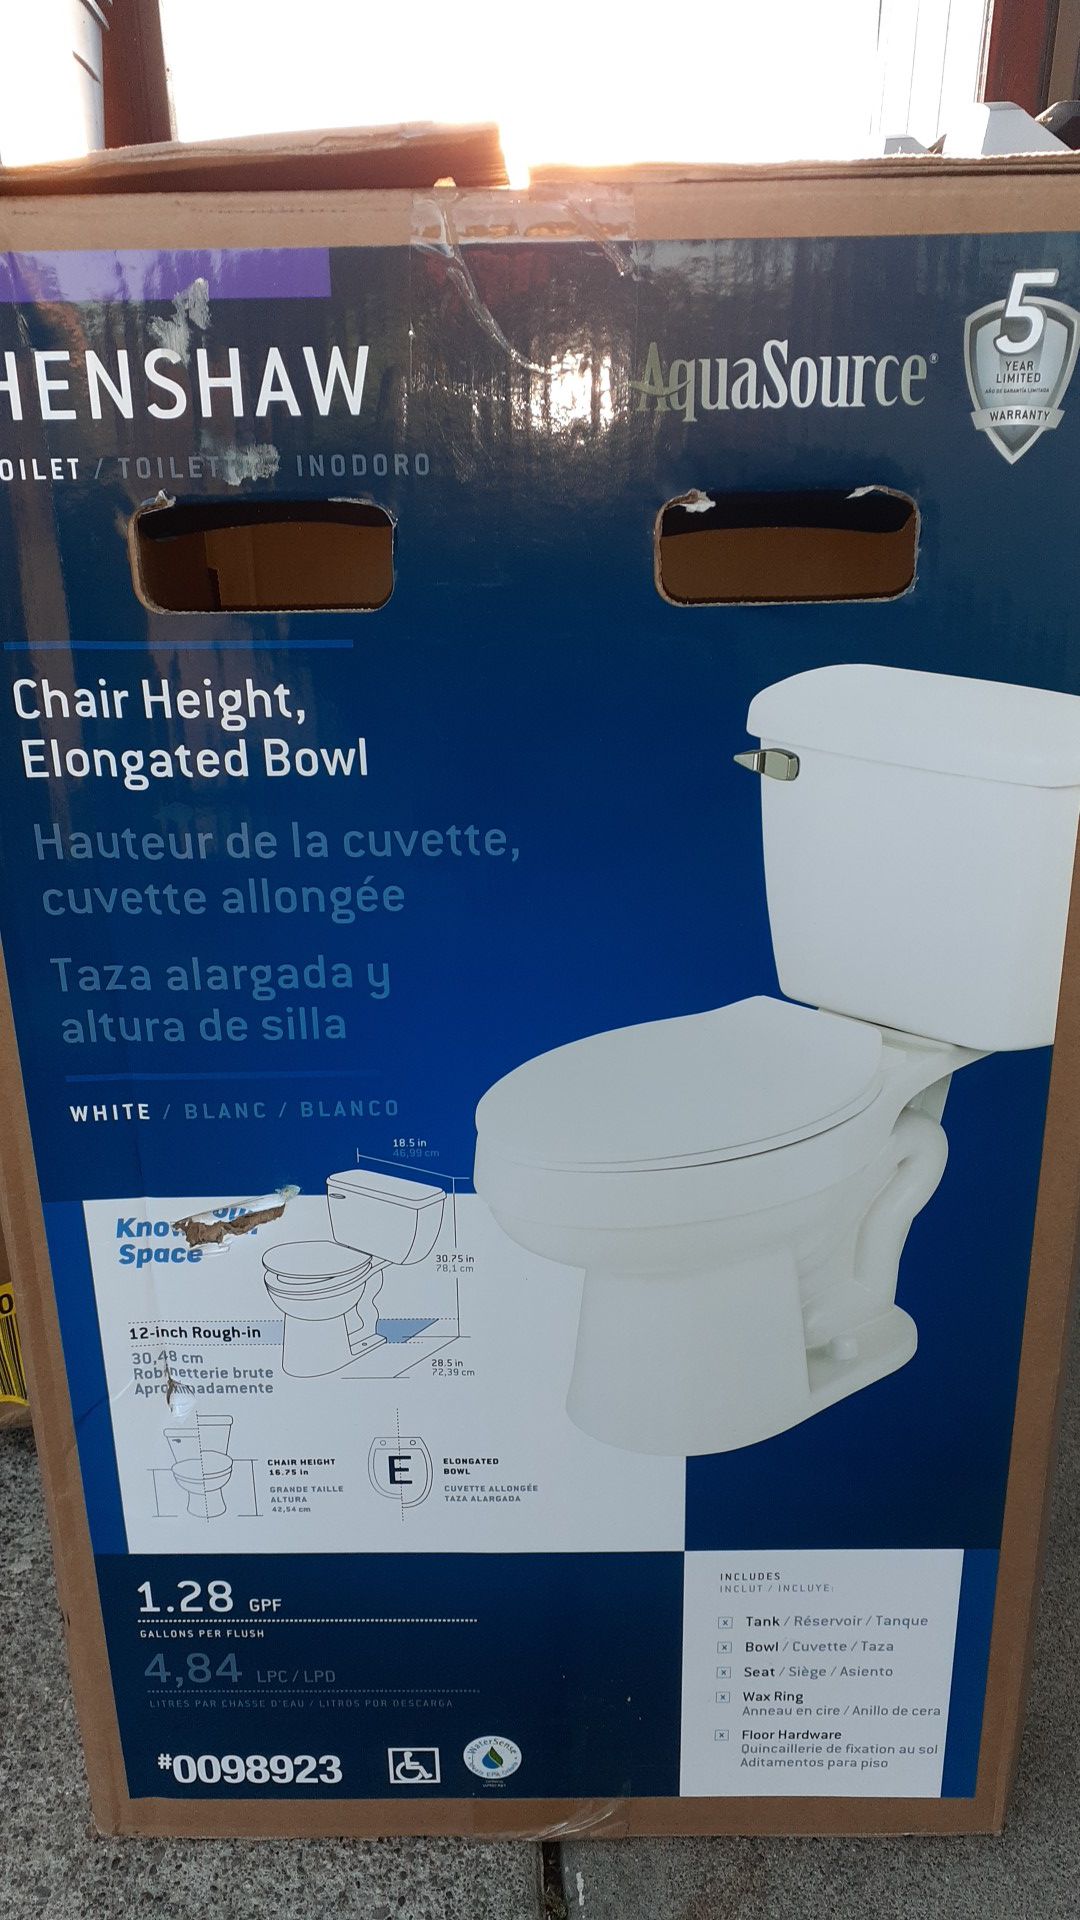 Hershaw toilet 1.28 gallons per flush